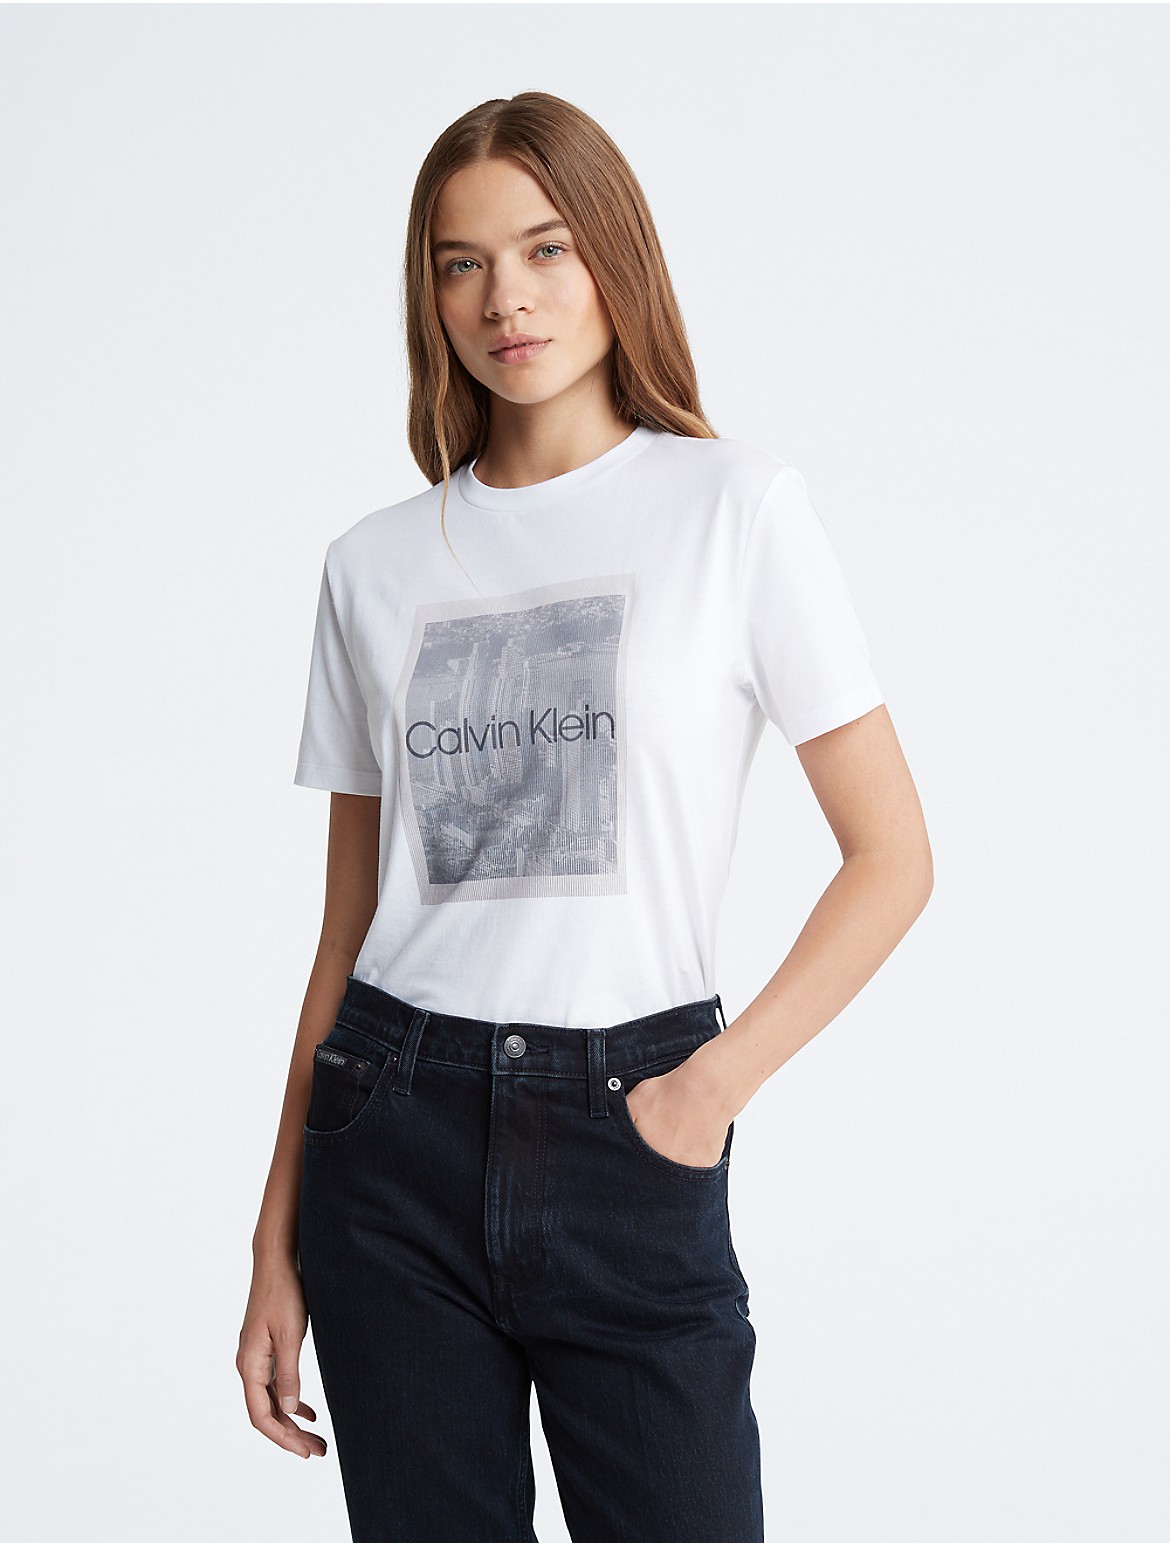 Calvin Klein Women's City Graphic Crewneck T-Shirt - White - S